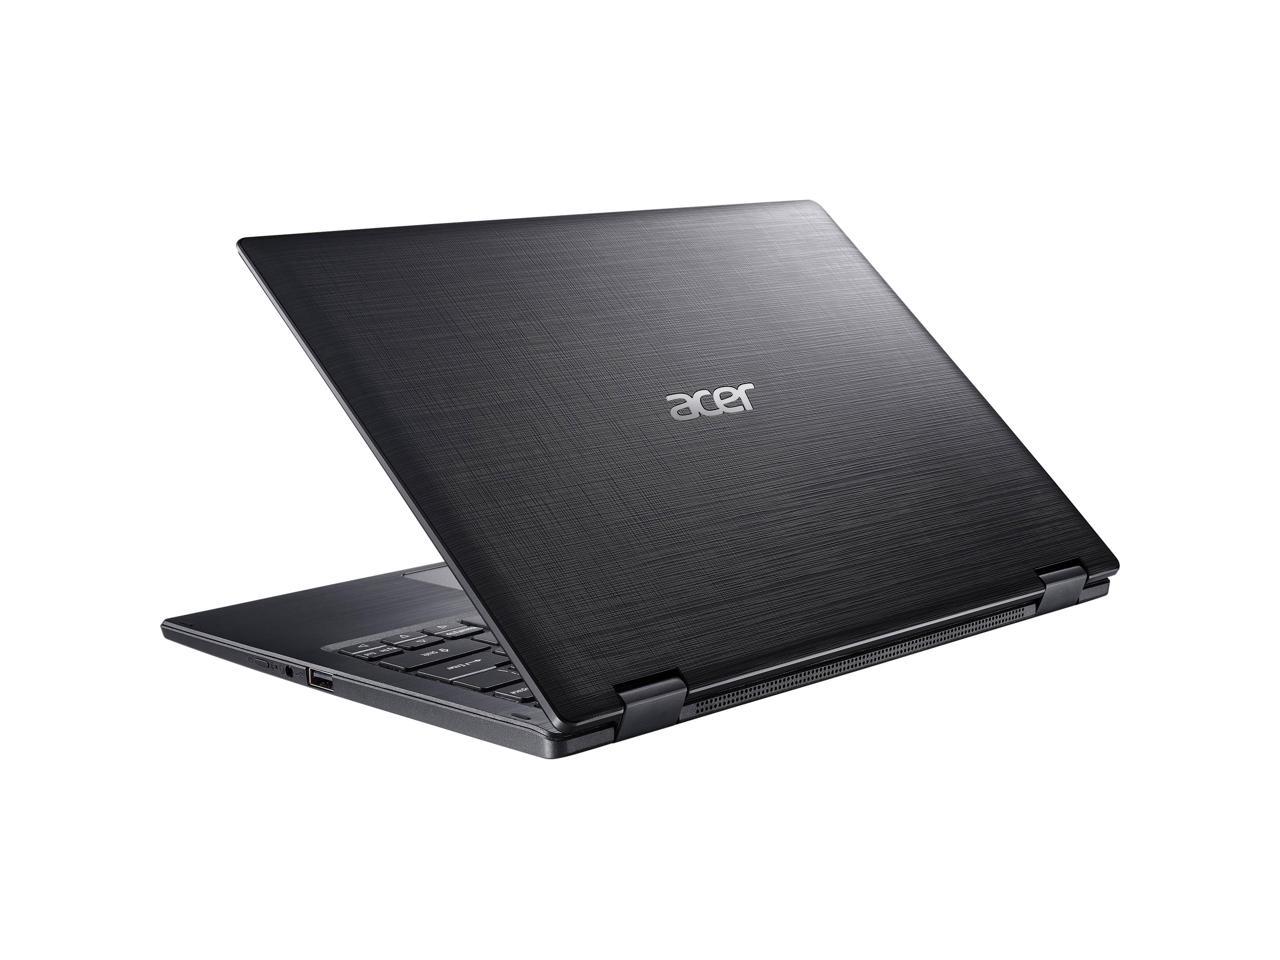 Acer Spin 1 Laptop Intel Pentium Silver N5000 1.10GHz 4GB Ram 64GB Flash Win10H 841631133398 | eBay